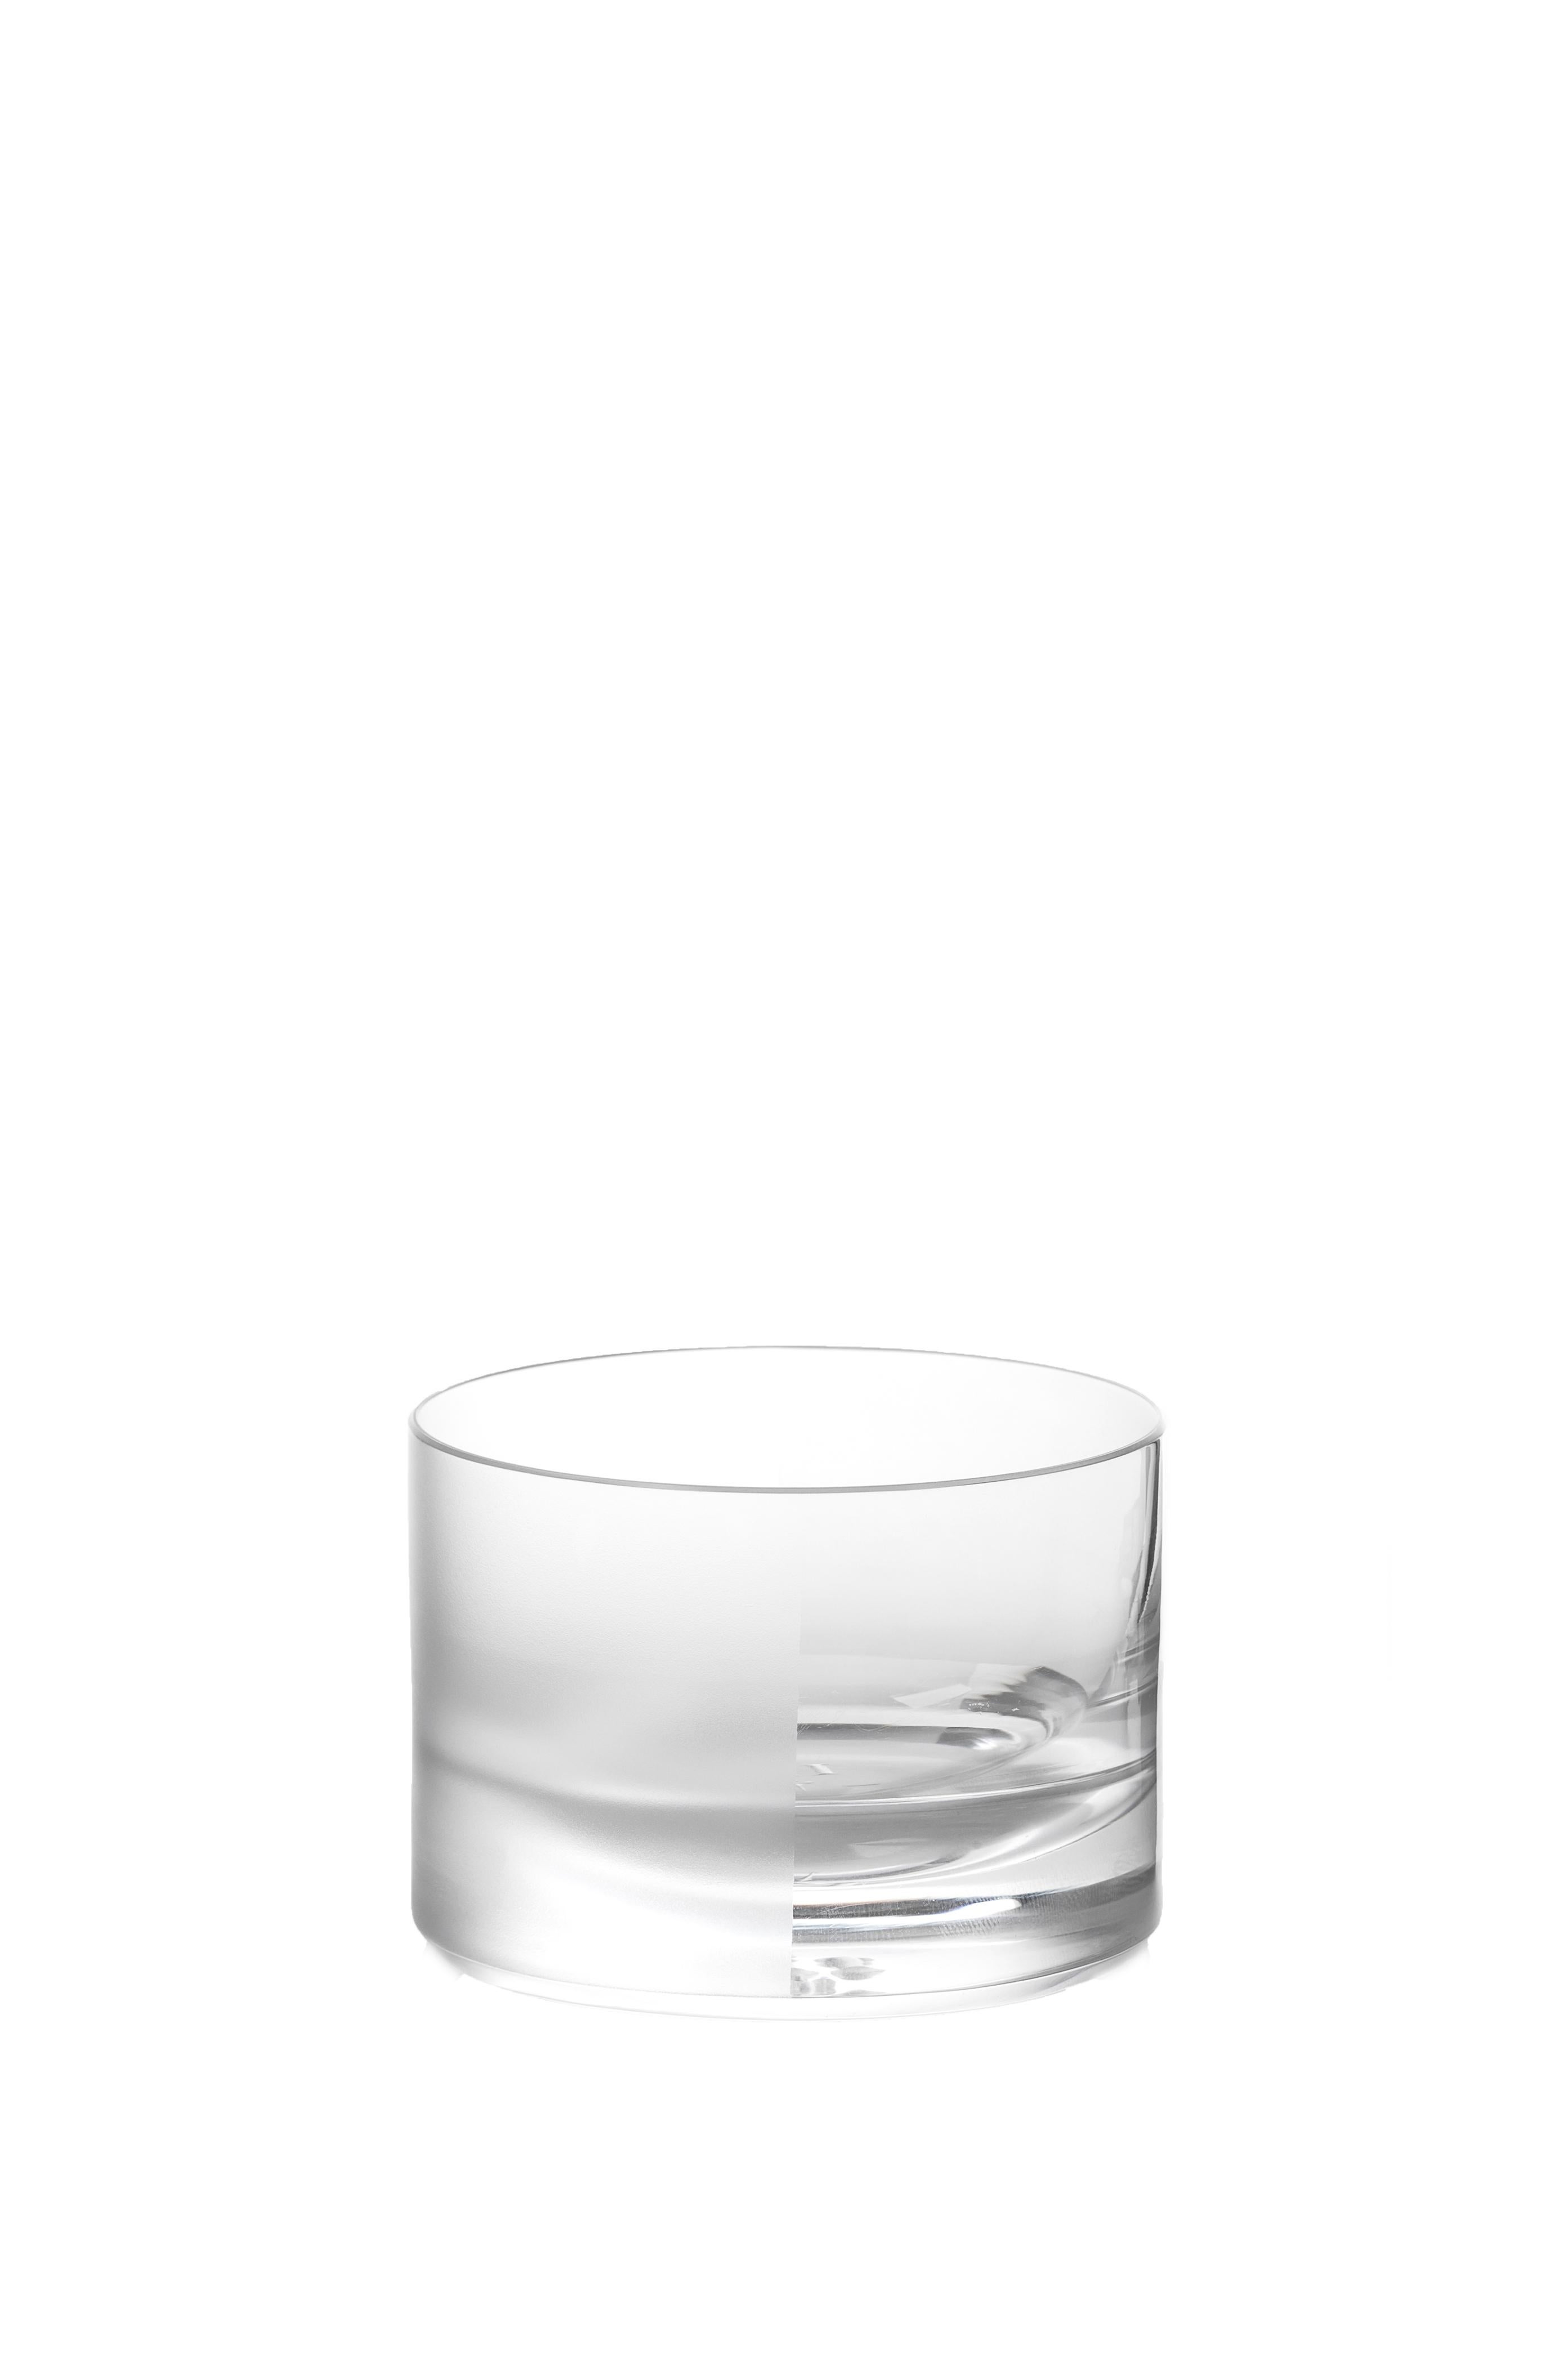 Scholten & Baijings Handmade Irish Crystal Low Glass 'Elements' Series CUT NO. I For Sale 1